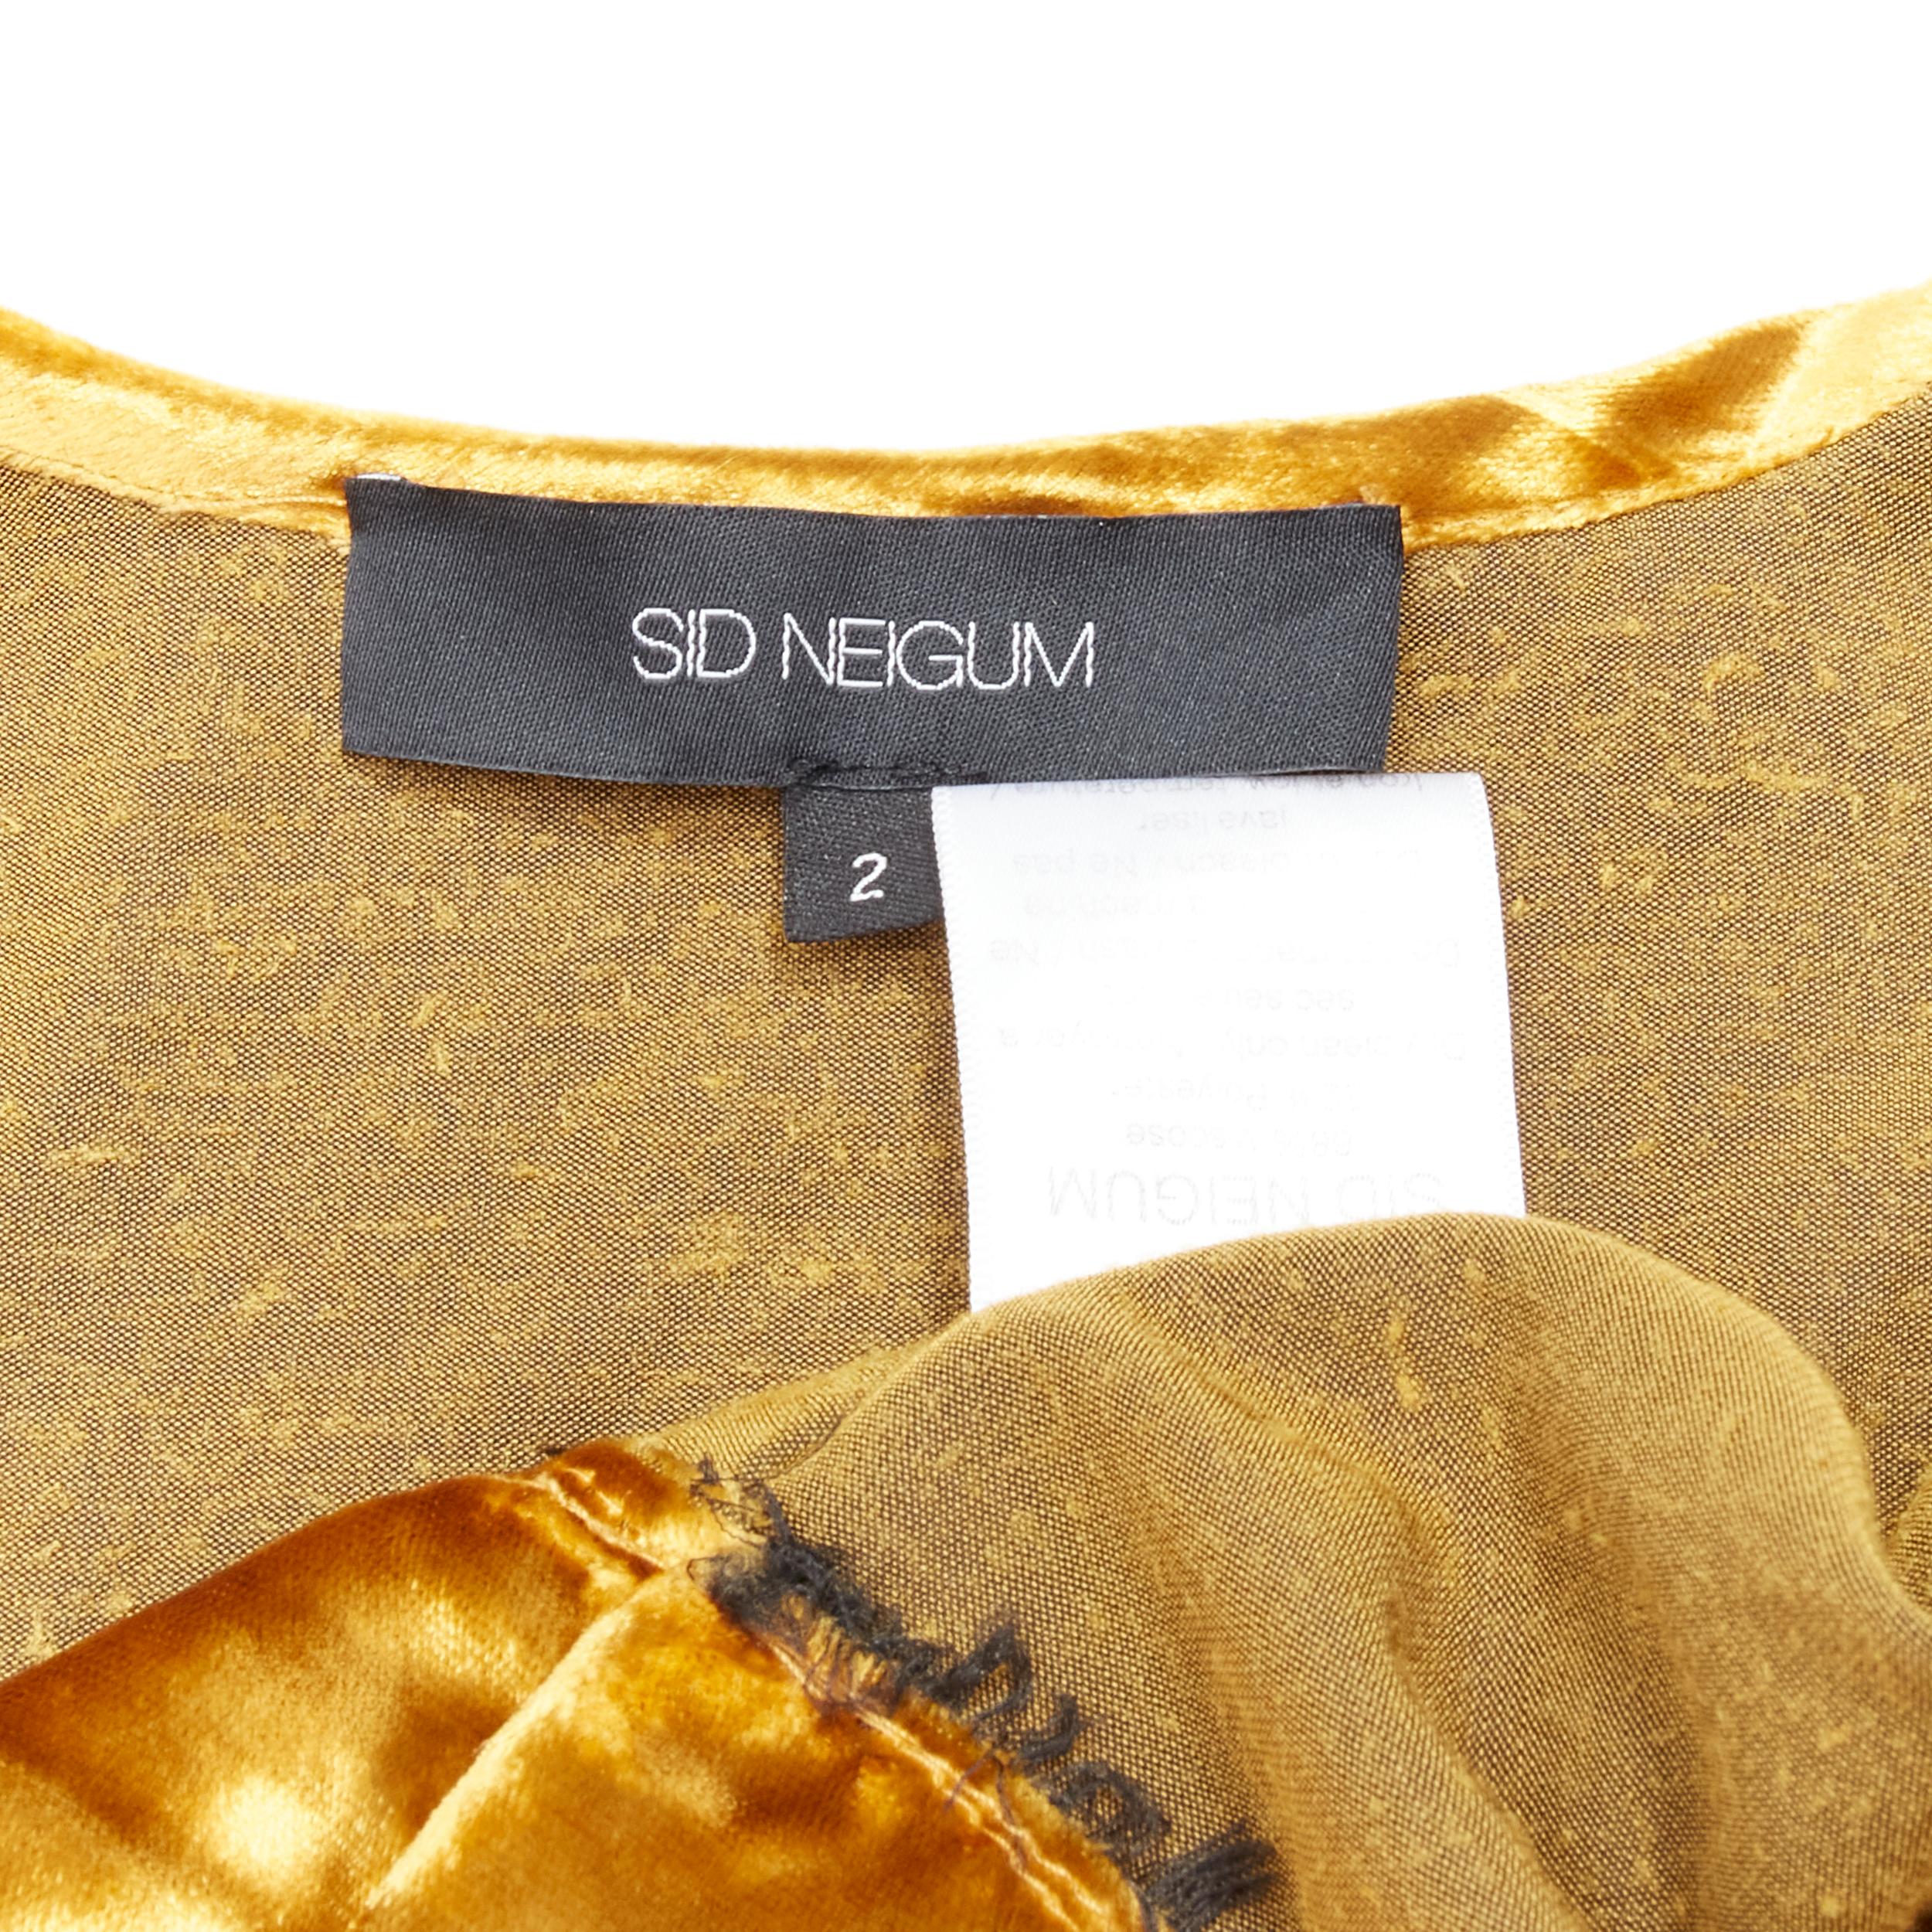 SID NEIGUM gold velvet black frayed seams wrap kimono robe jacket US2 S For Sale 2